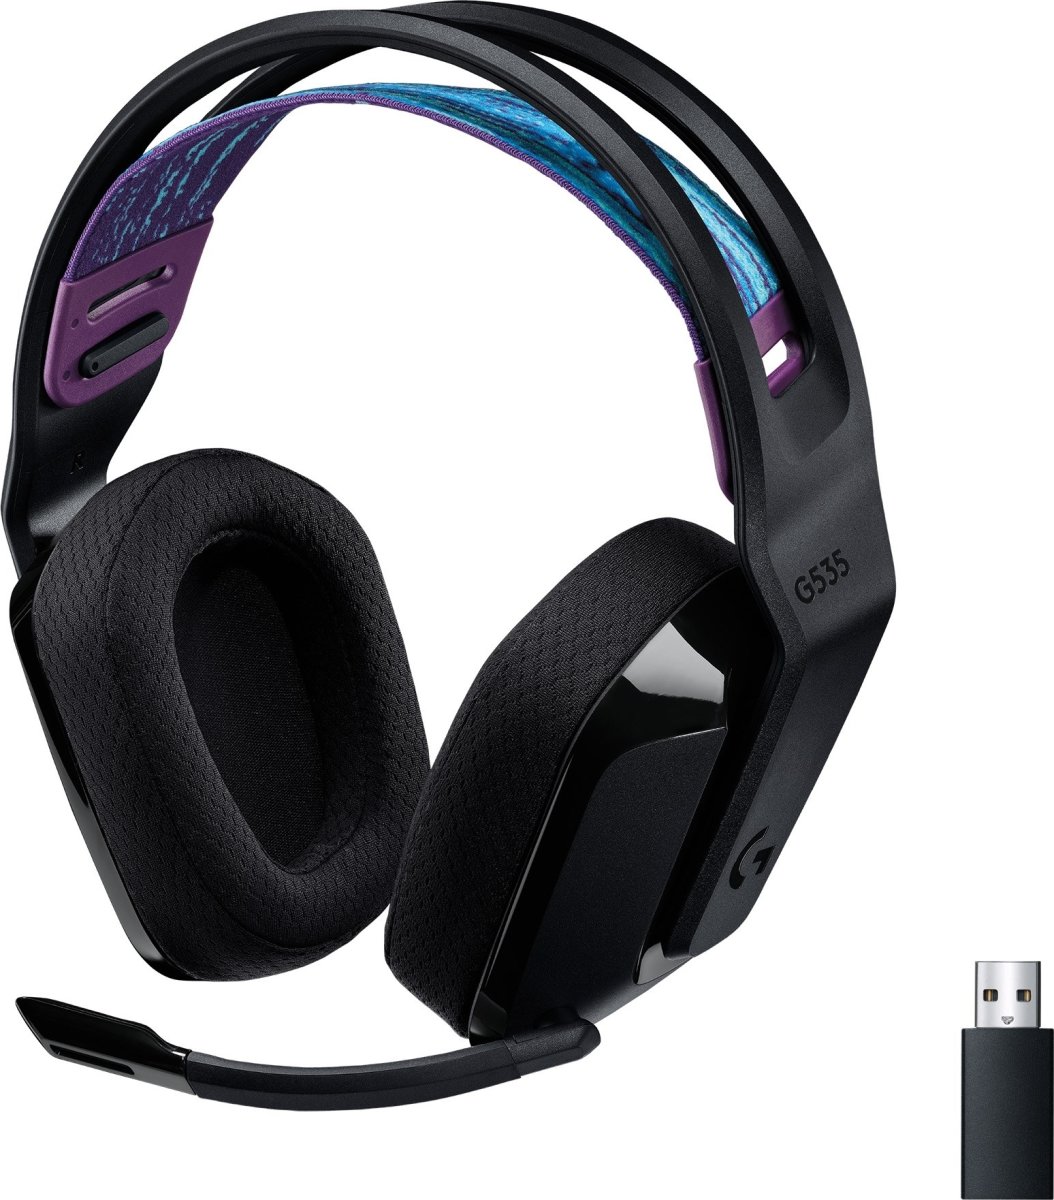 Logitech G535 LIGHTSPEED trådlöst headset, svart